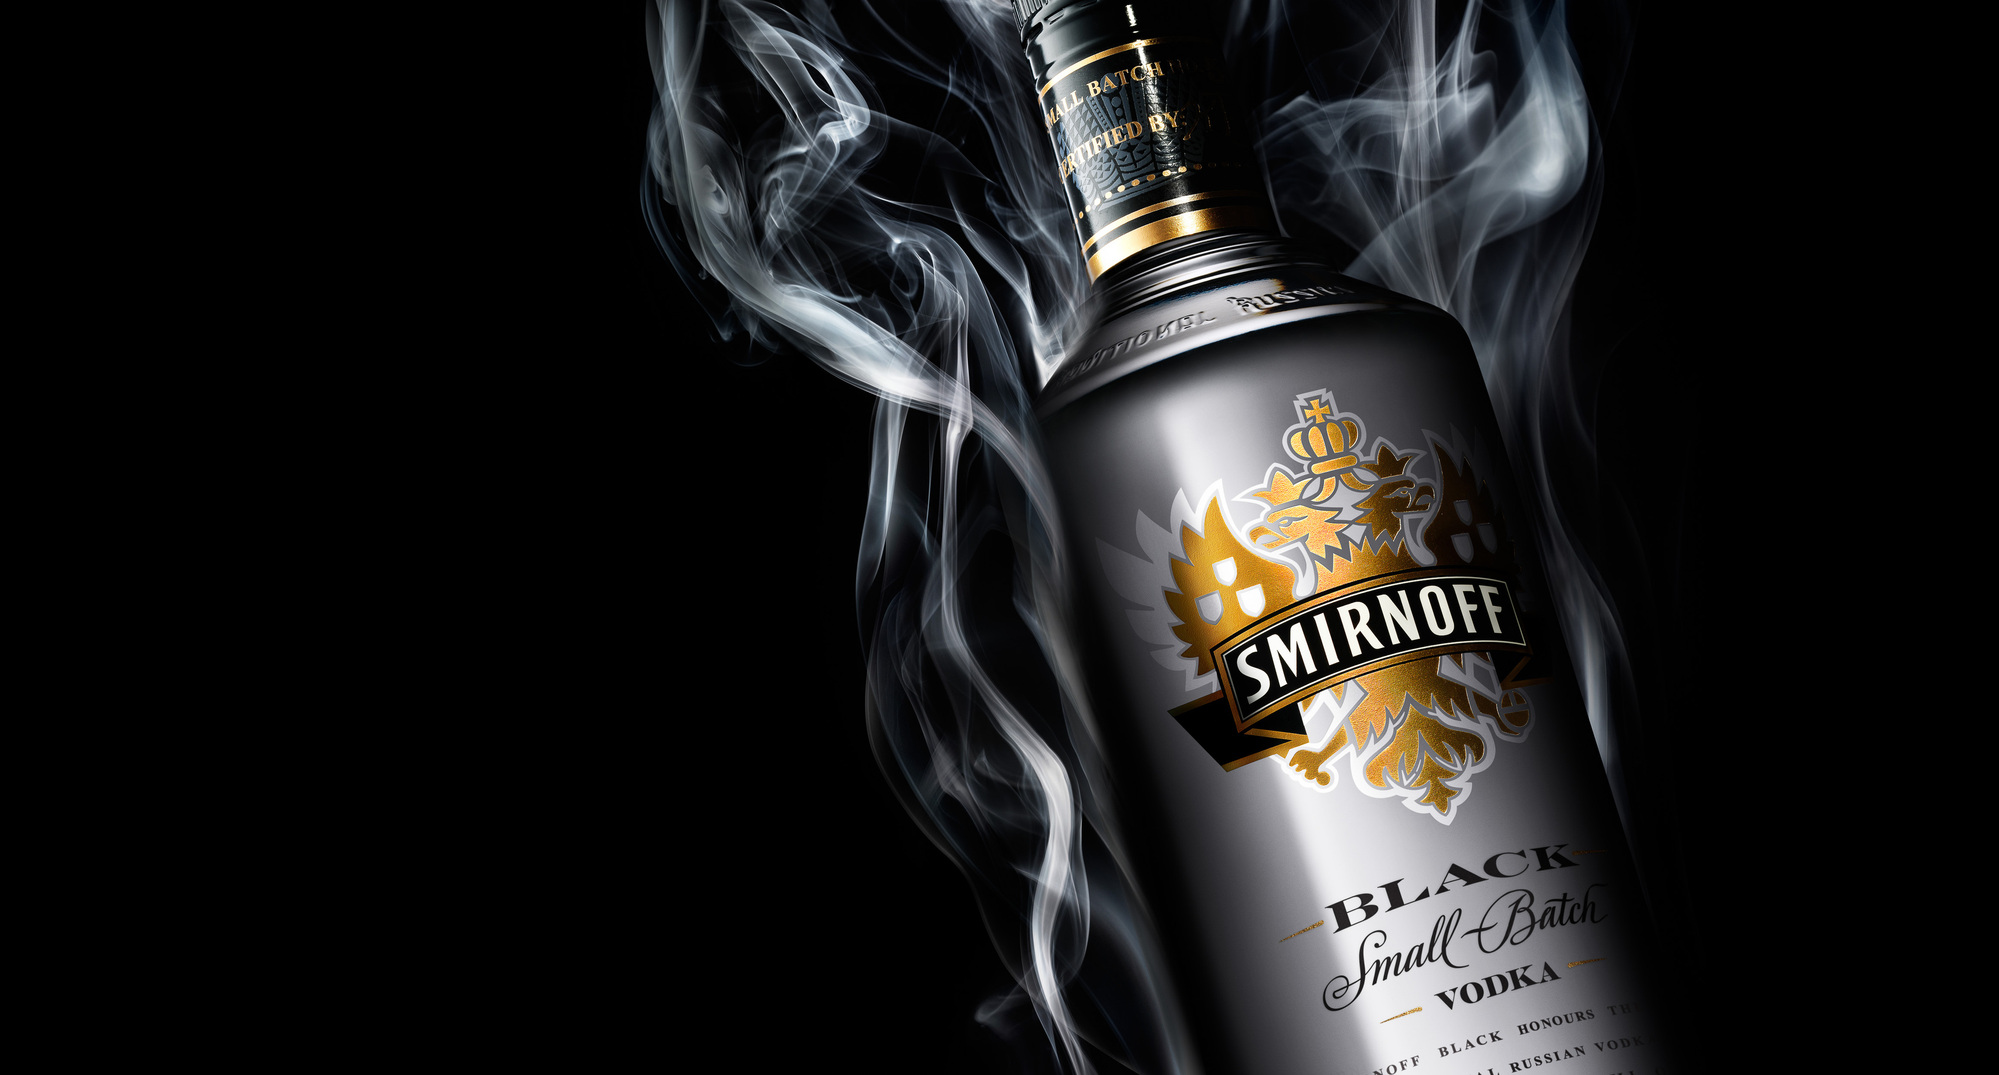 Smirnoff black vodka by beverage and liquids photographer Timothy Hogan in Los Angeles